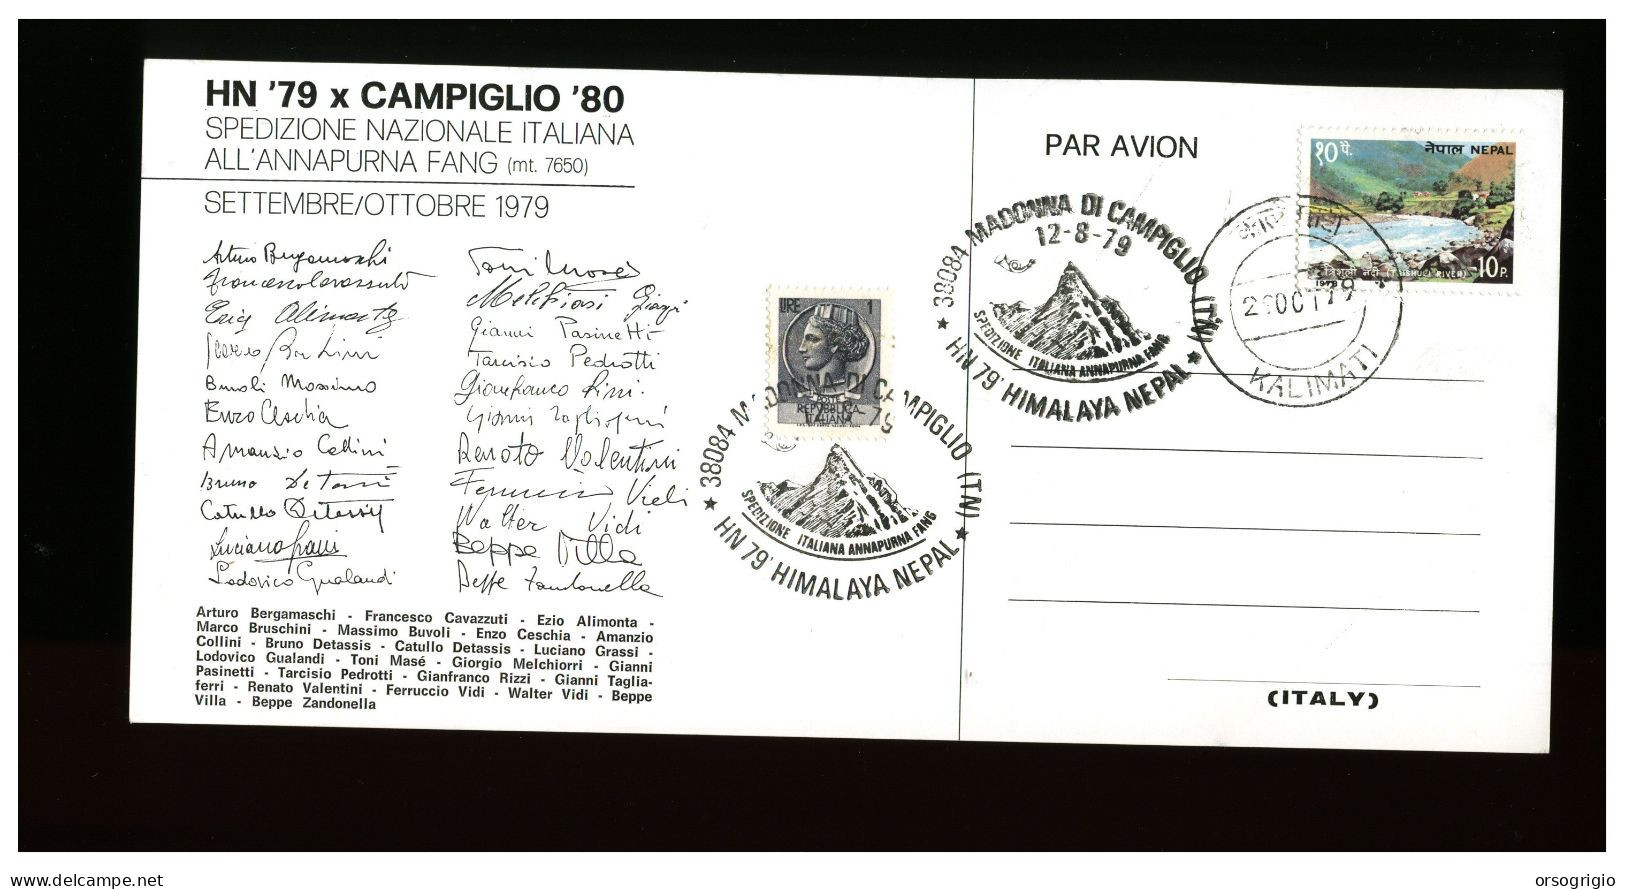 ITALIA - 1979 - MADONNA DI CAMPIGLIO - SPEDIZIONE NAZIONALE ALL'ANNAPURNA FANG - HIMALAYA NEPAL - Climbing